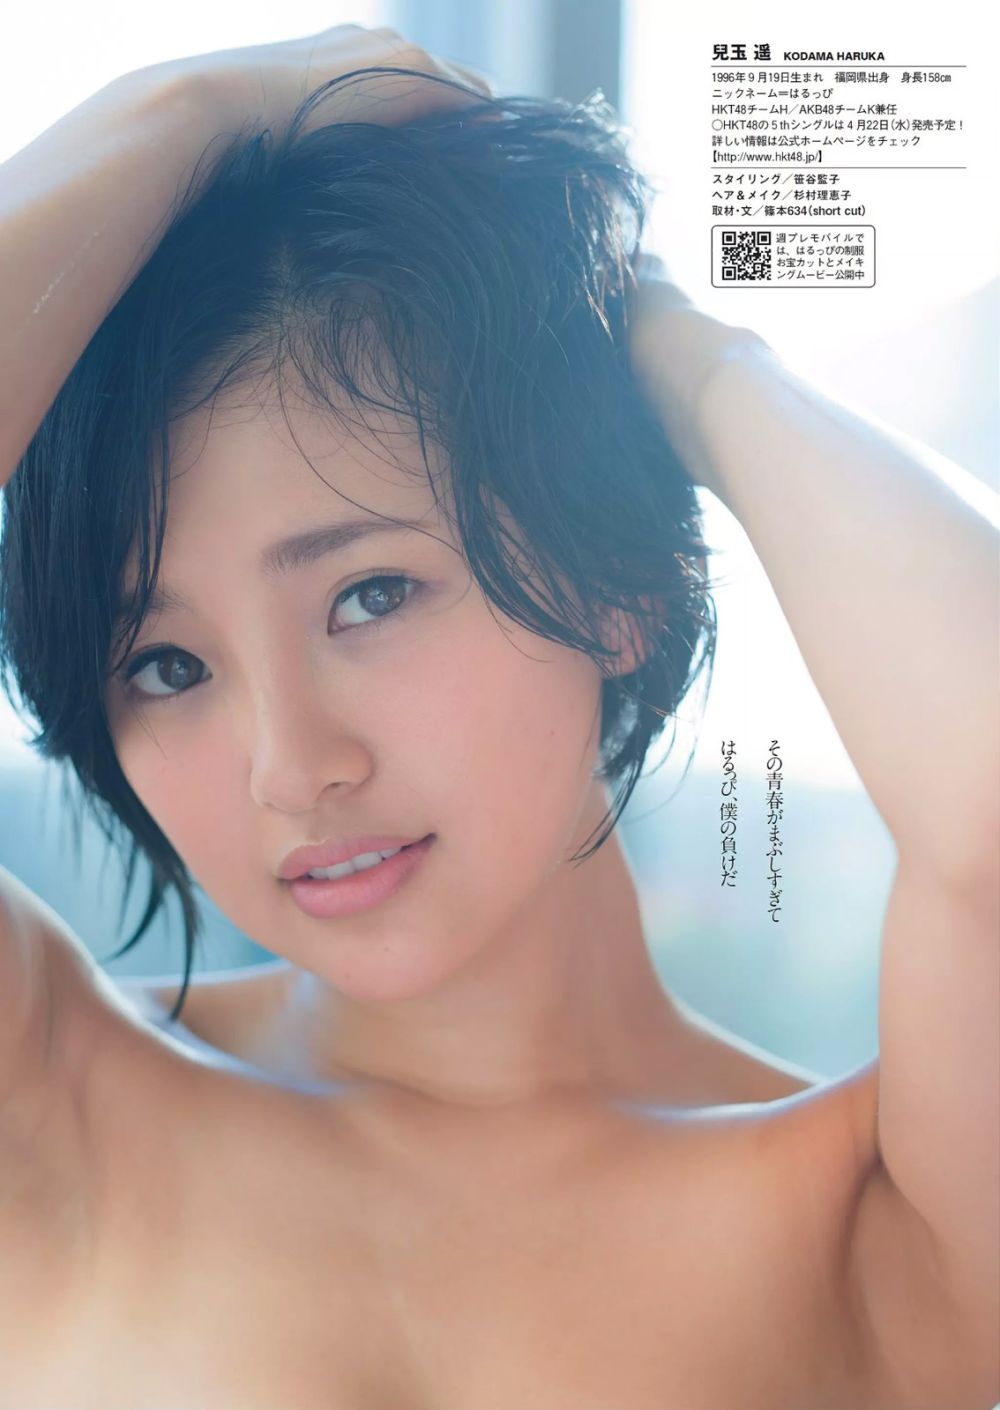 Haruka Kodama Sexy and Hottest Photos , Latest Pics